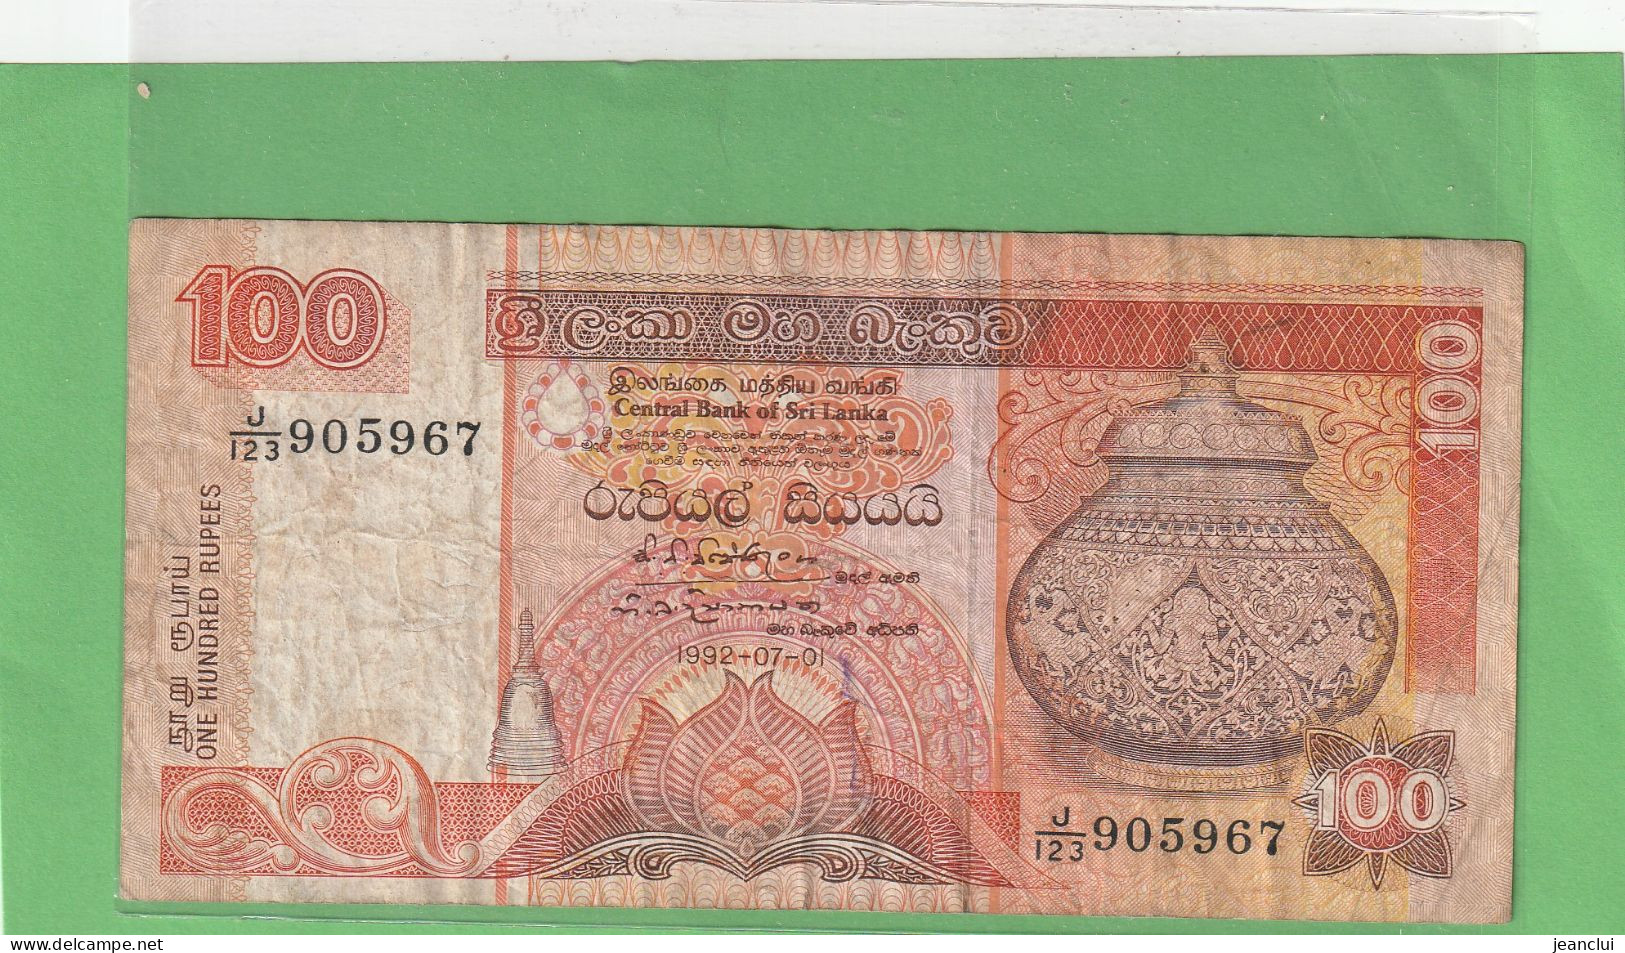 CENTRAL BANK OF SRI LANKA   .  100 RUPEES  .  01-07-1992  .  N°   J/123 905967 .  2 SCANNES  .  BILLET TRES USITE - Sri Lanka